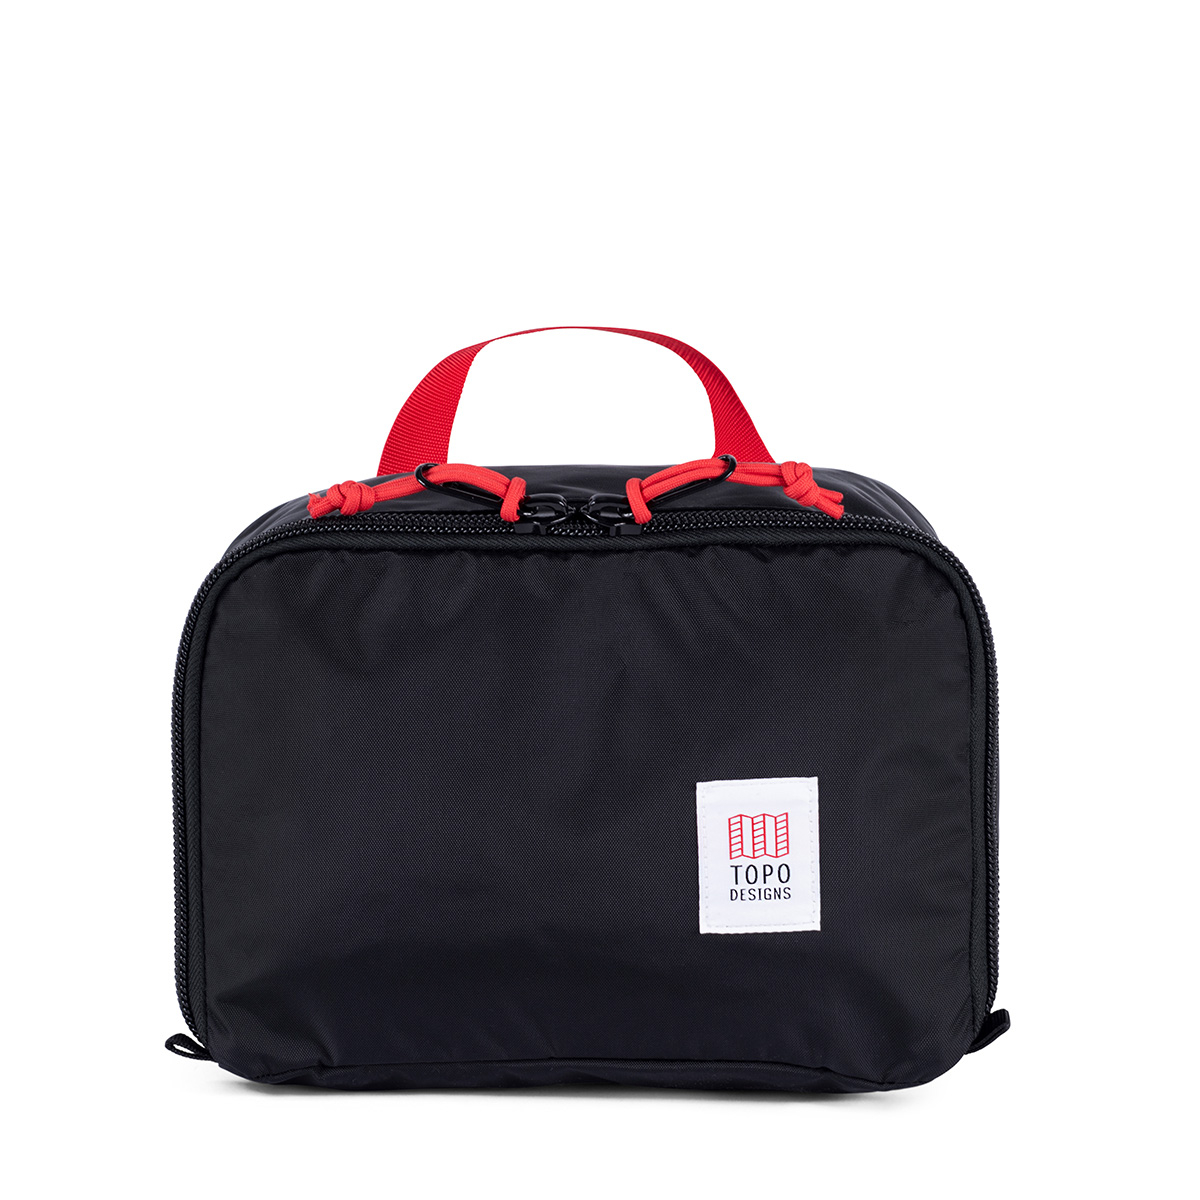 Topo Designs Pack Bag 10L Cube Black, het optimaliseren van je bagage is nog nooit zo eenvoudig geweest